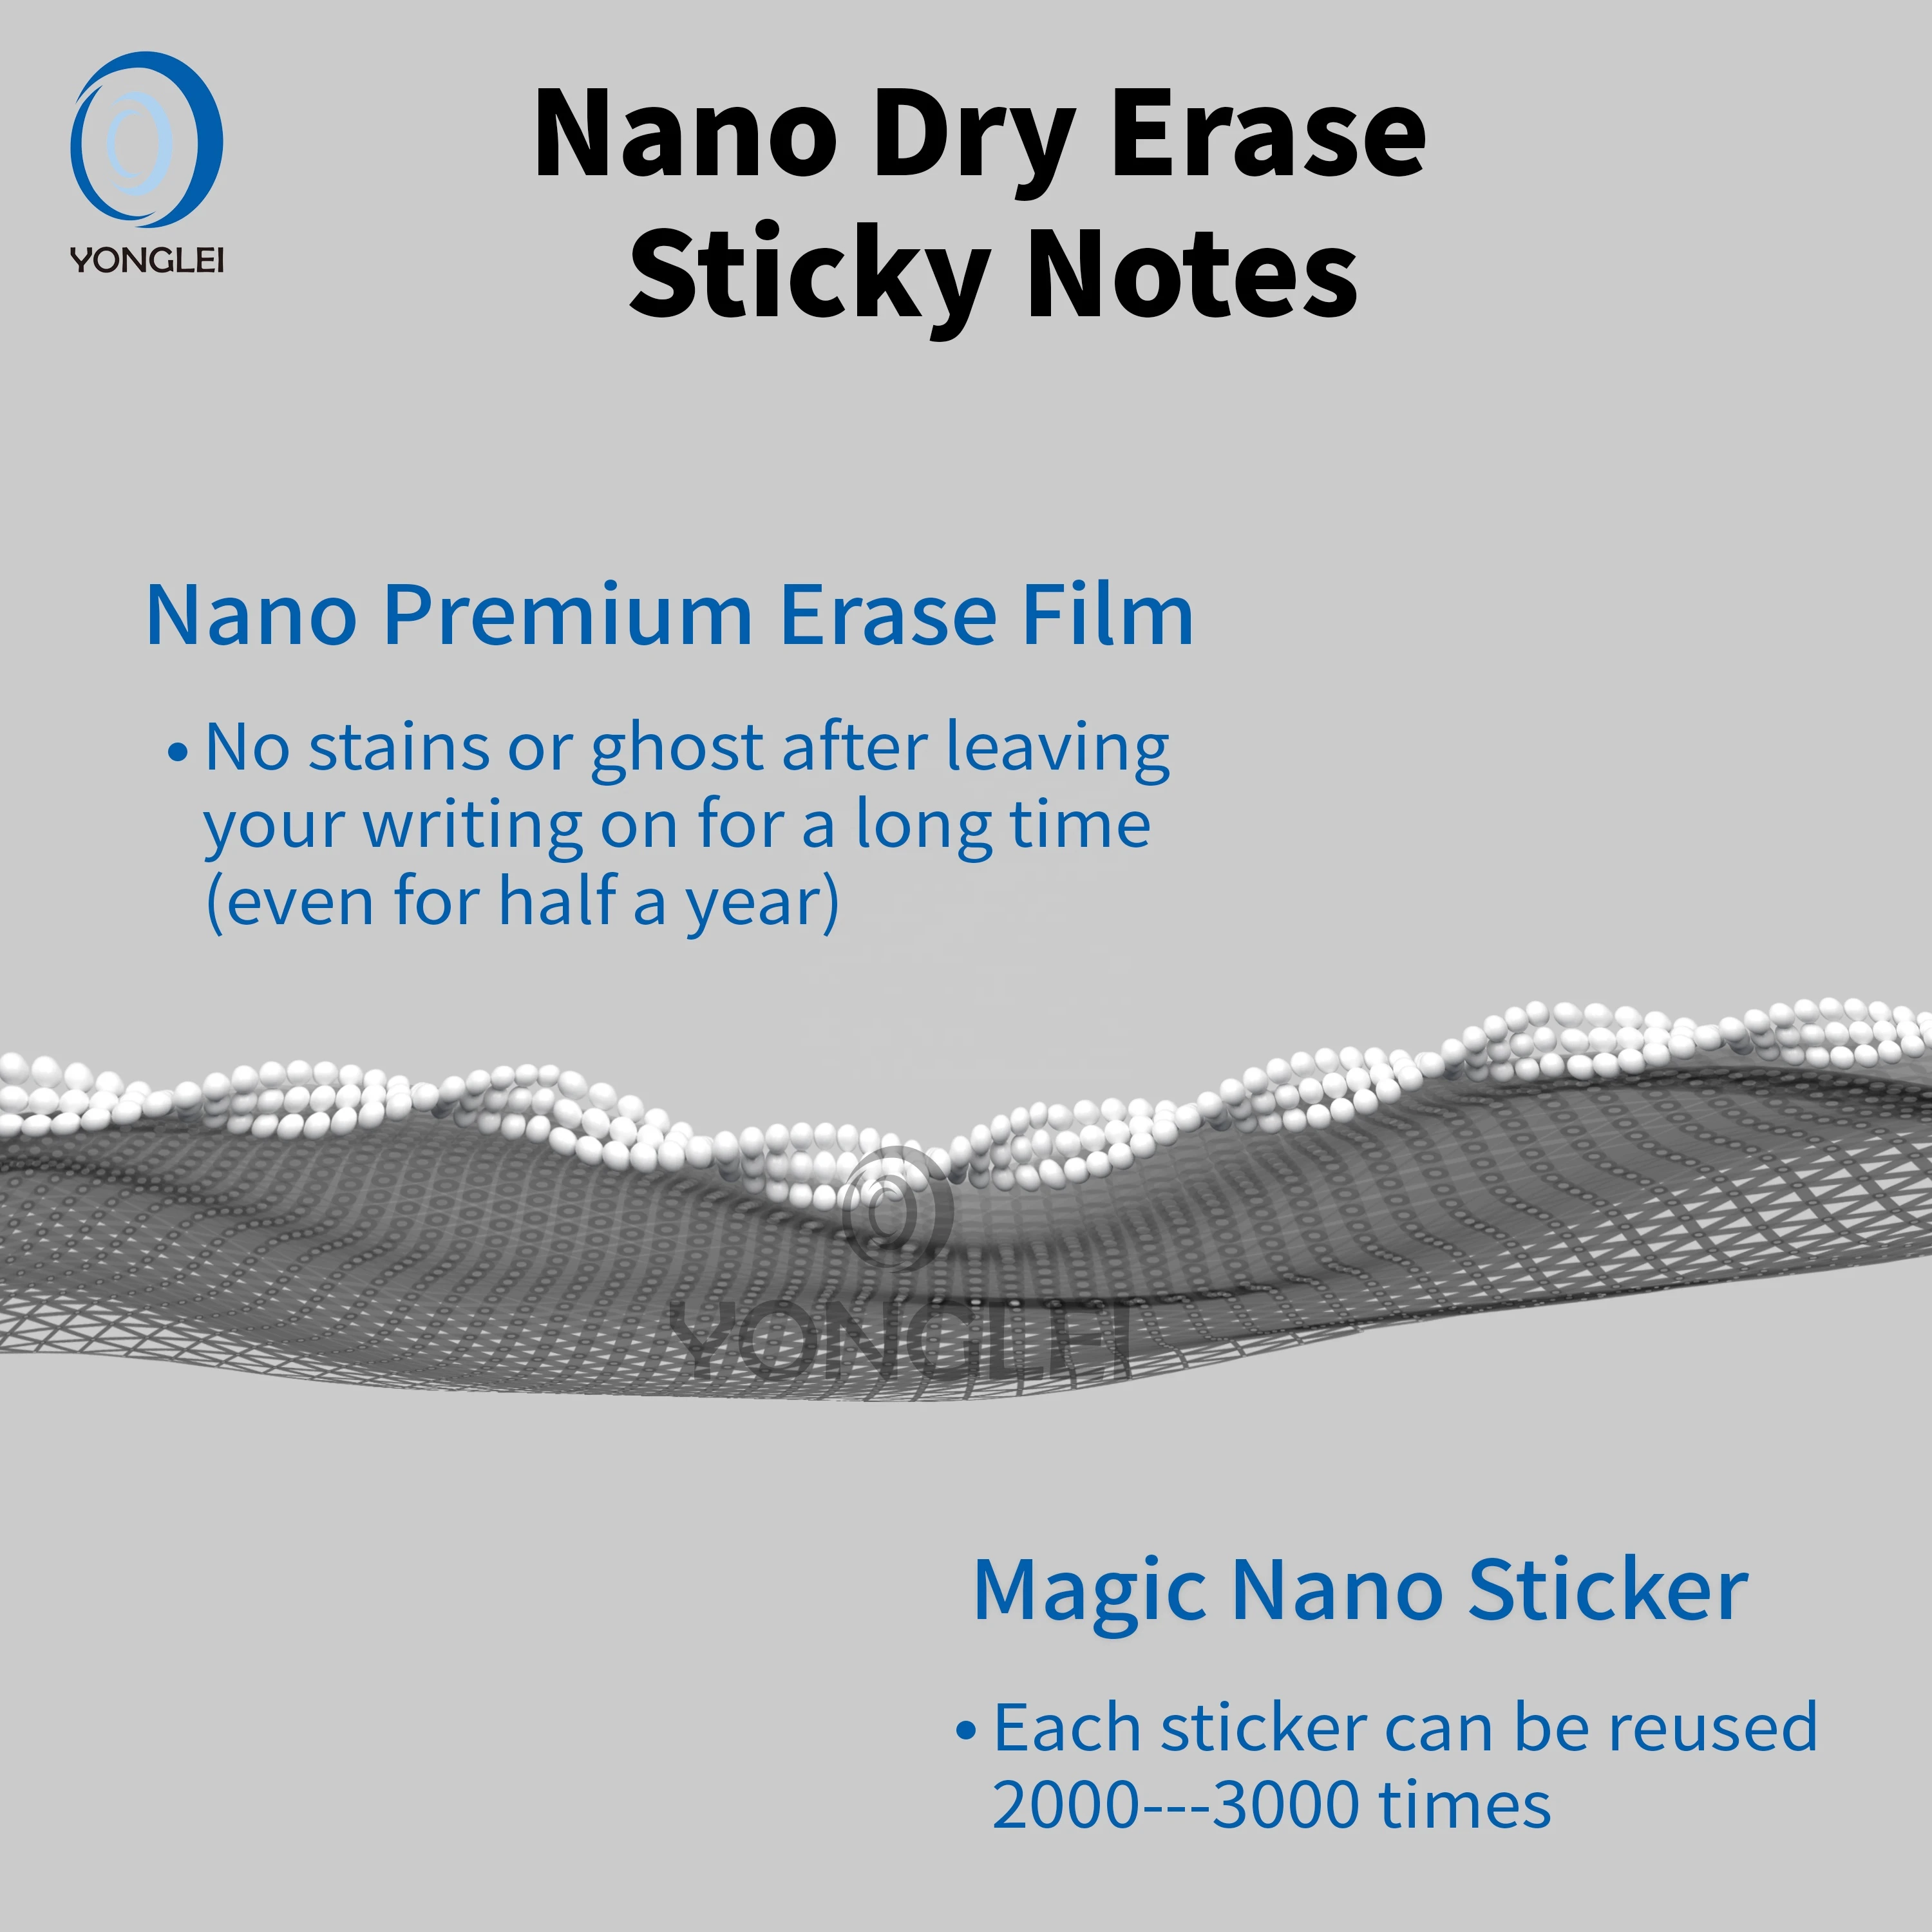 SN1.3-4 Yonglei nano reusable dry erase surface super sticky note dry erase board